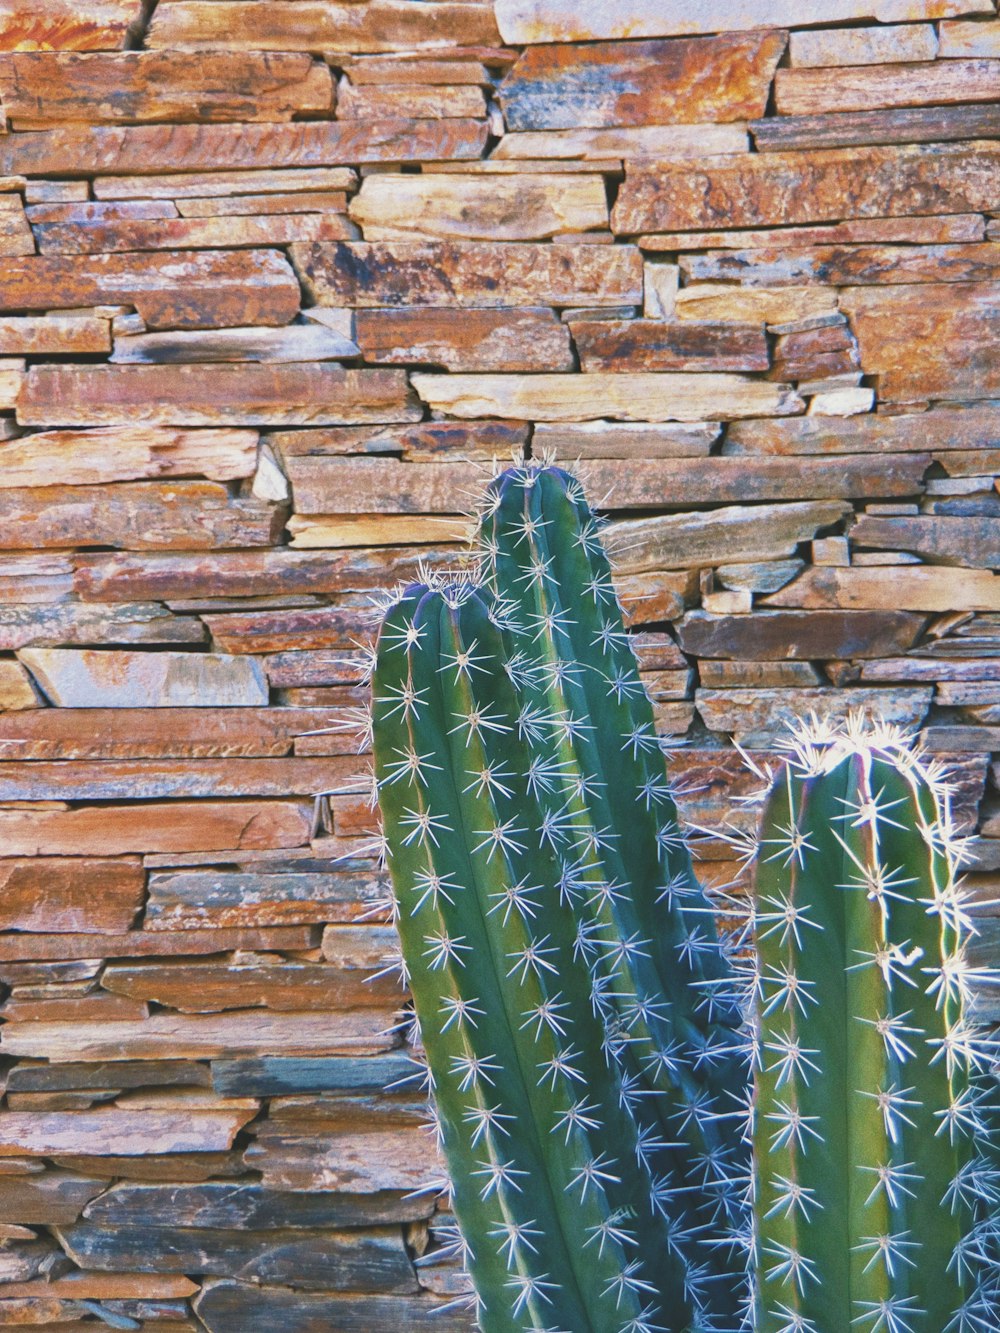 green cactus on brown brick wall